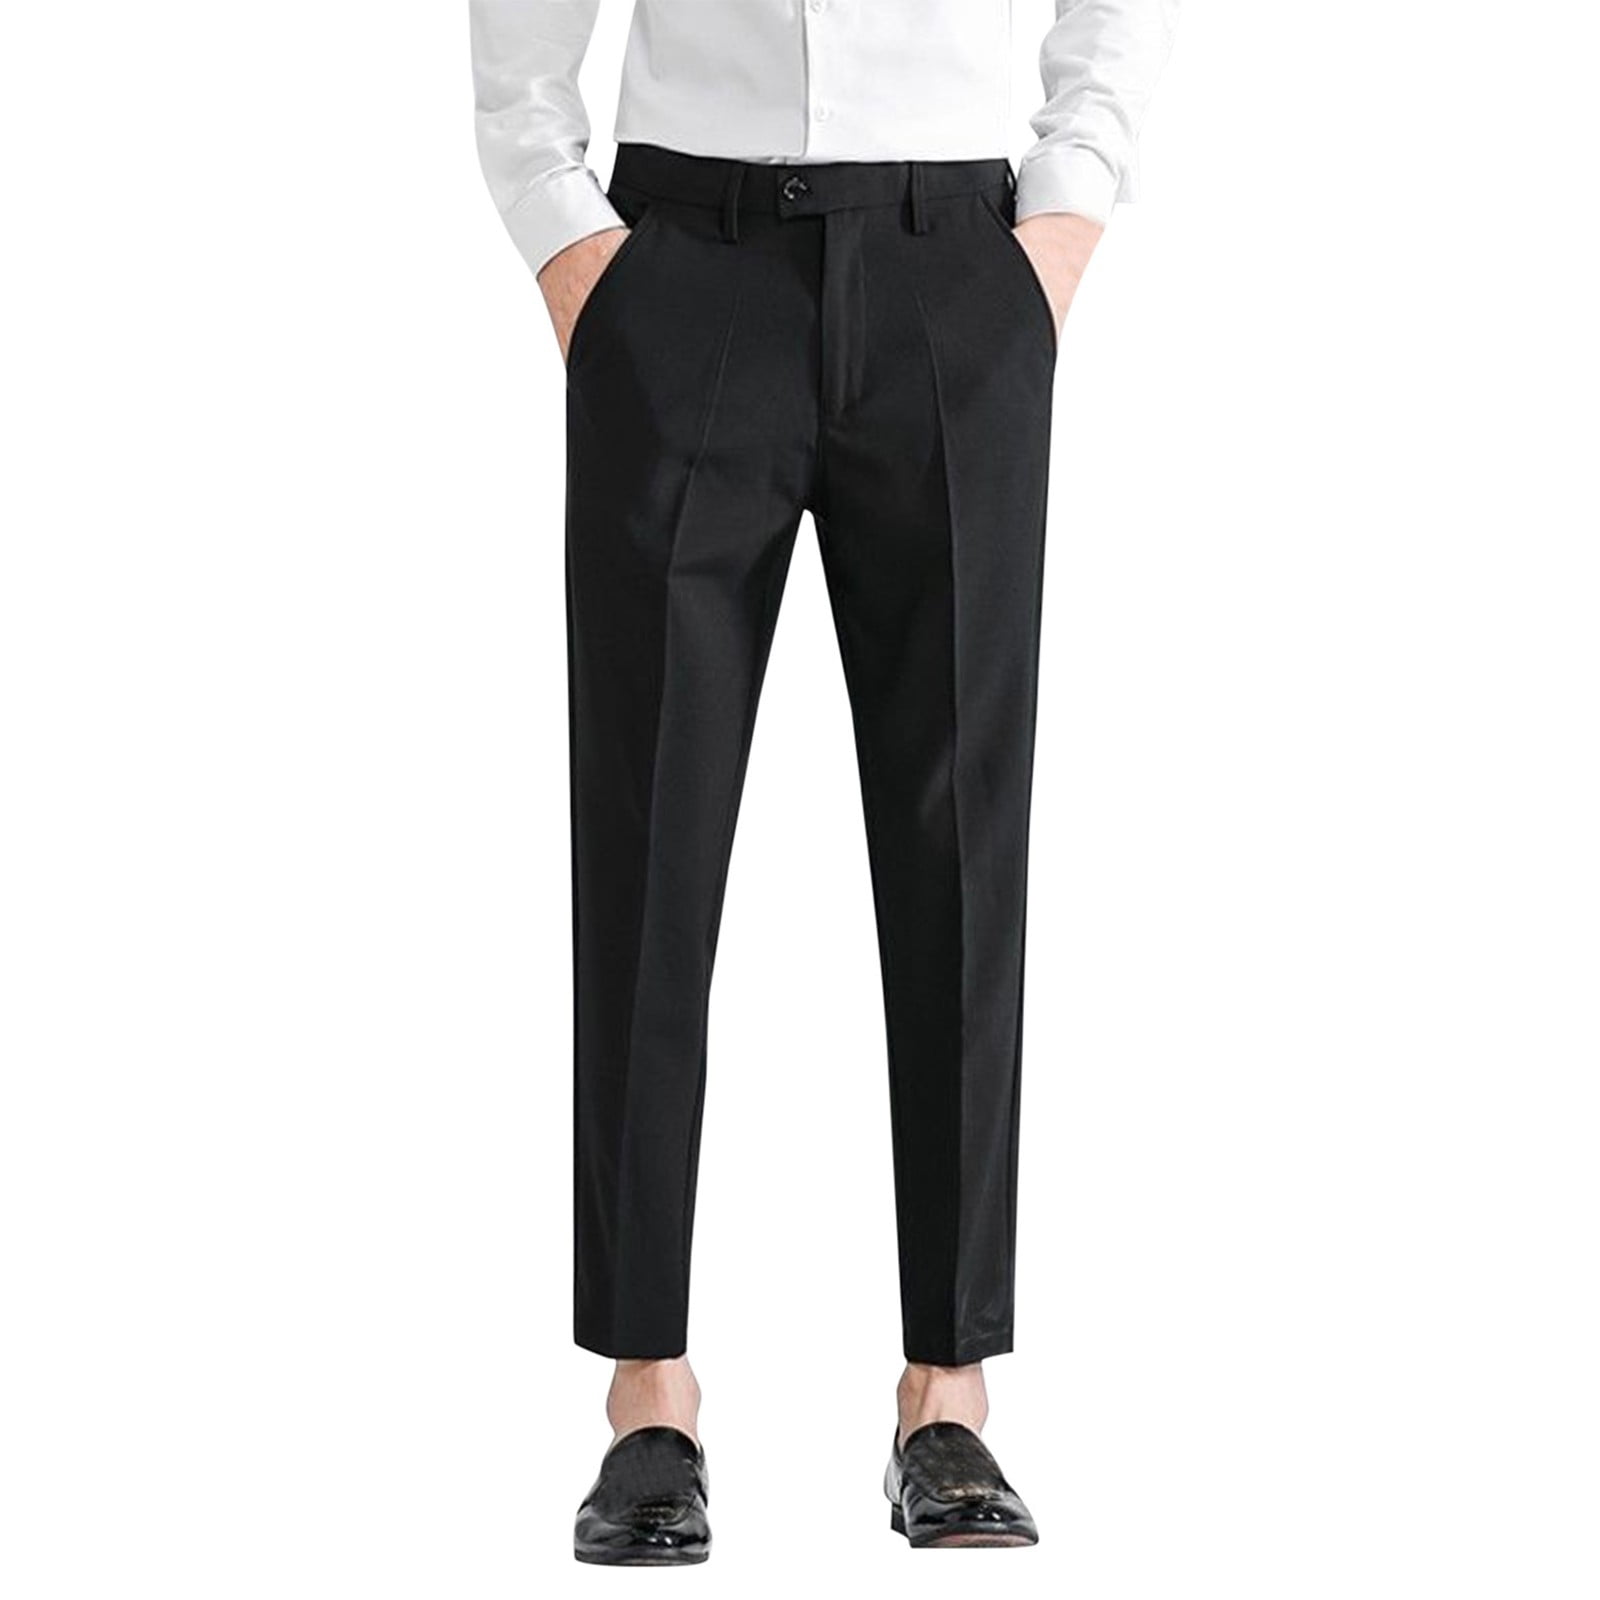 B91xZ Mens Work Pants Solid Trousers Pants Suit Ankle-Length